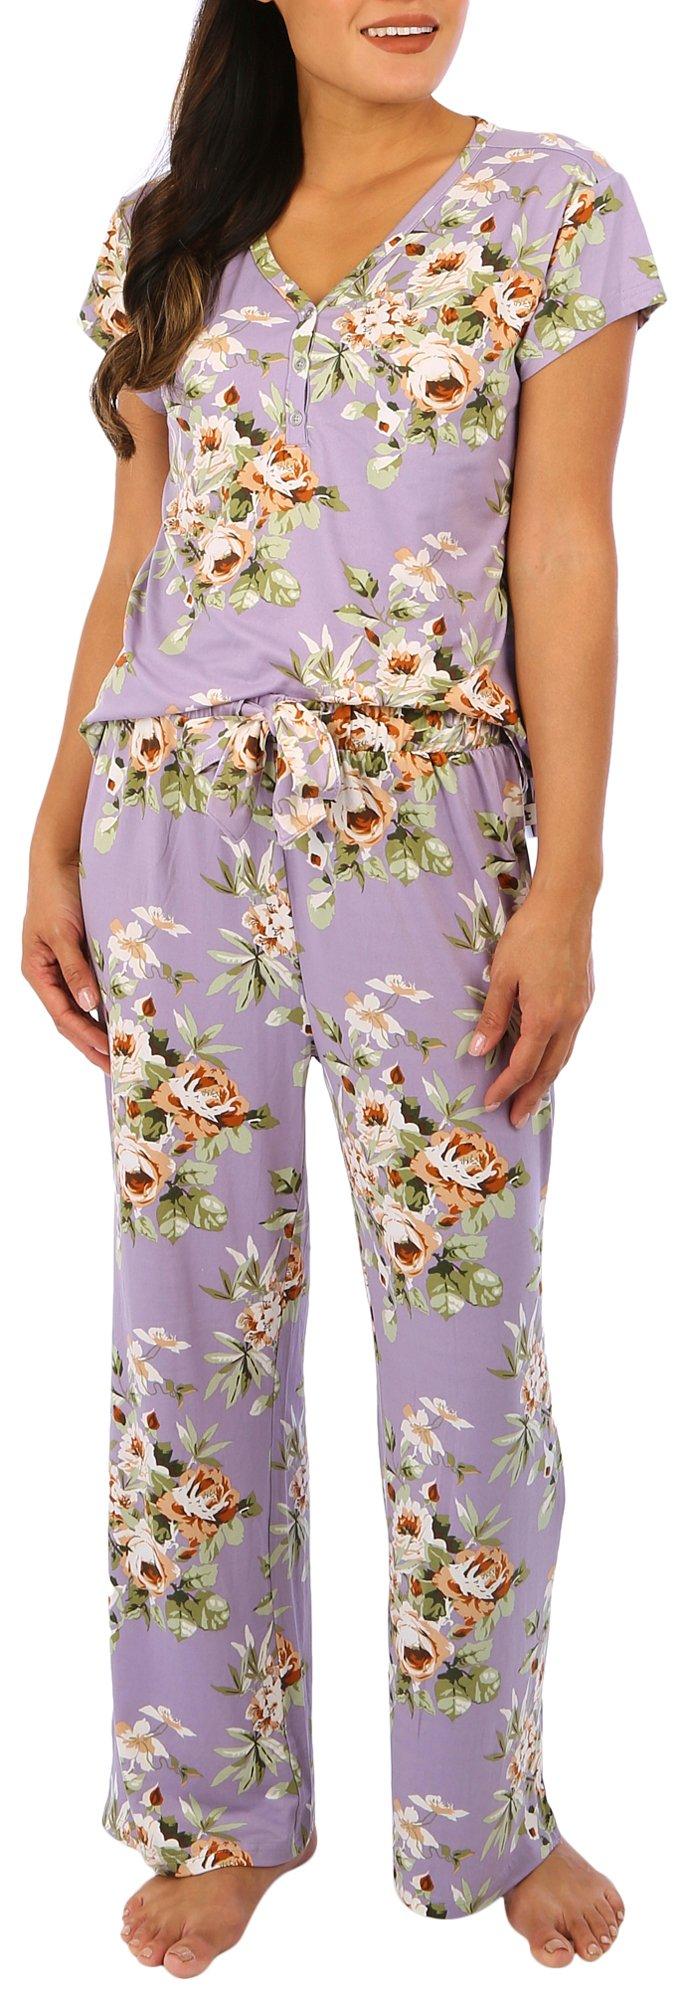 Echo Womens 2-Pc. Floral Print Sleepwear Set